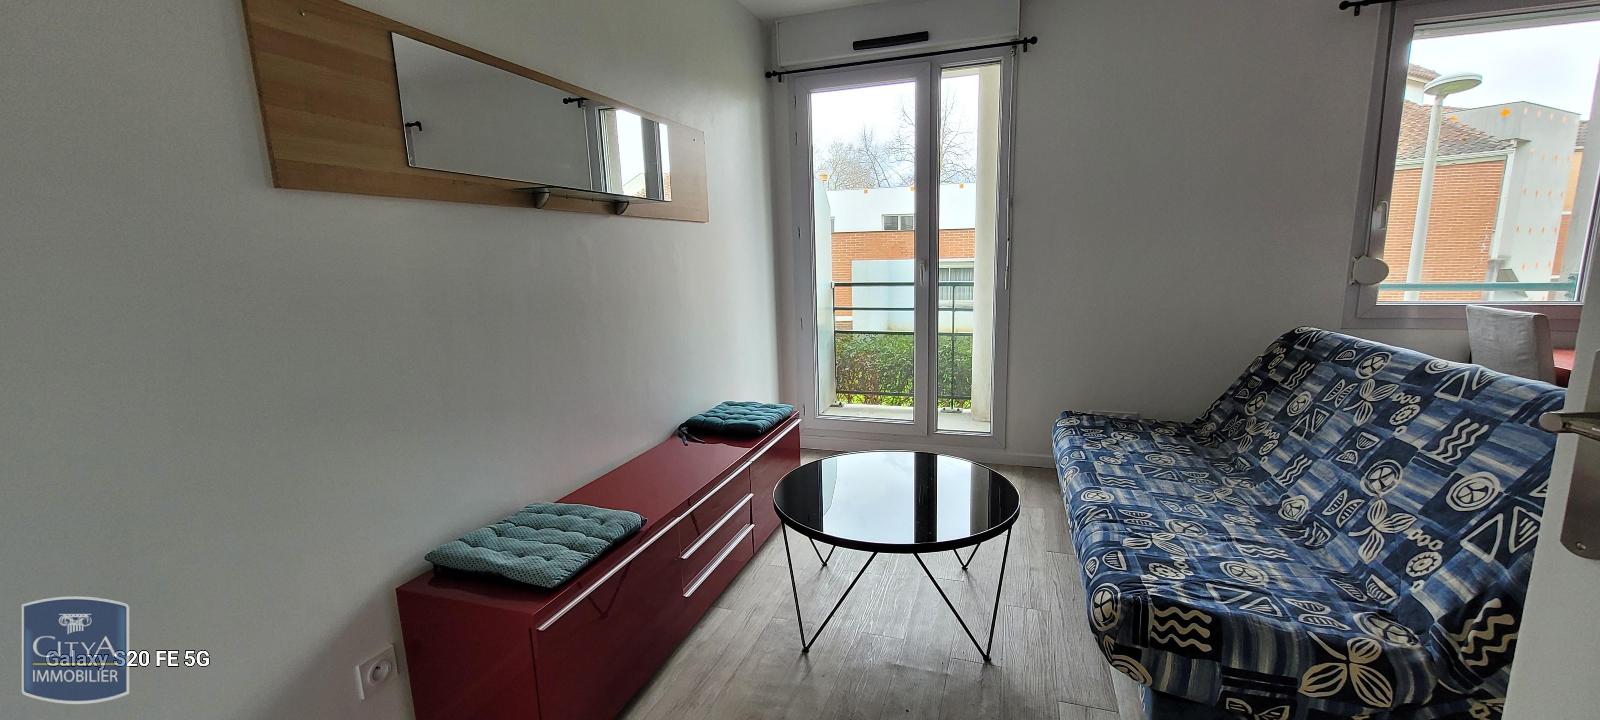 Photo 1 appartement Moissy-Cramayel